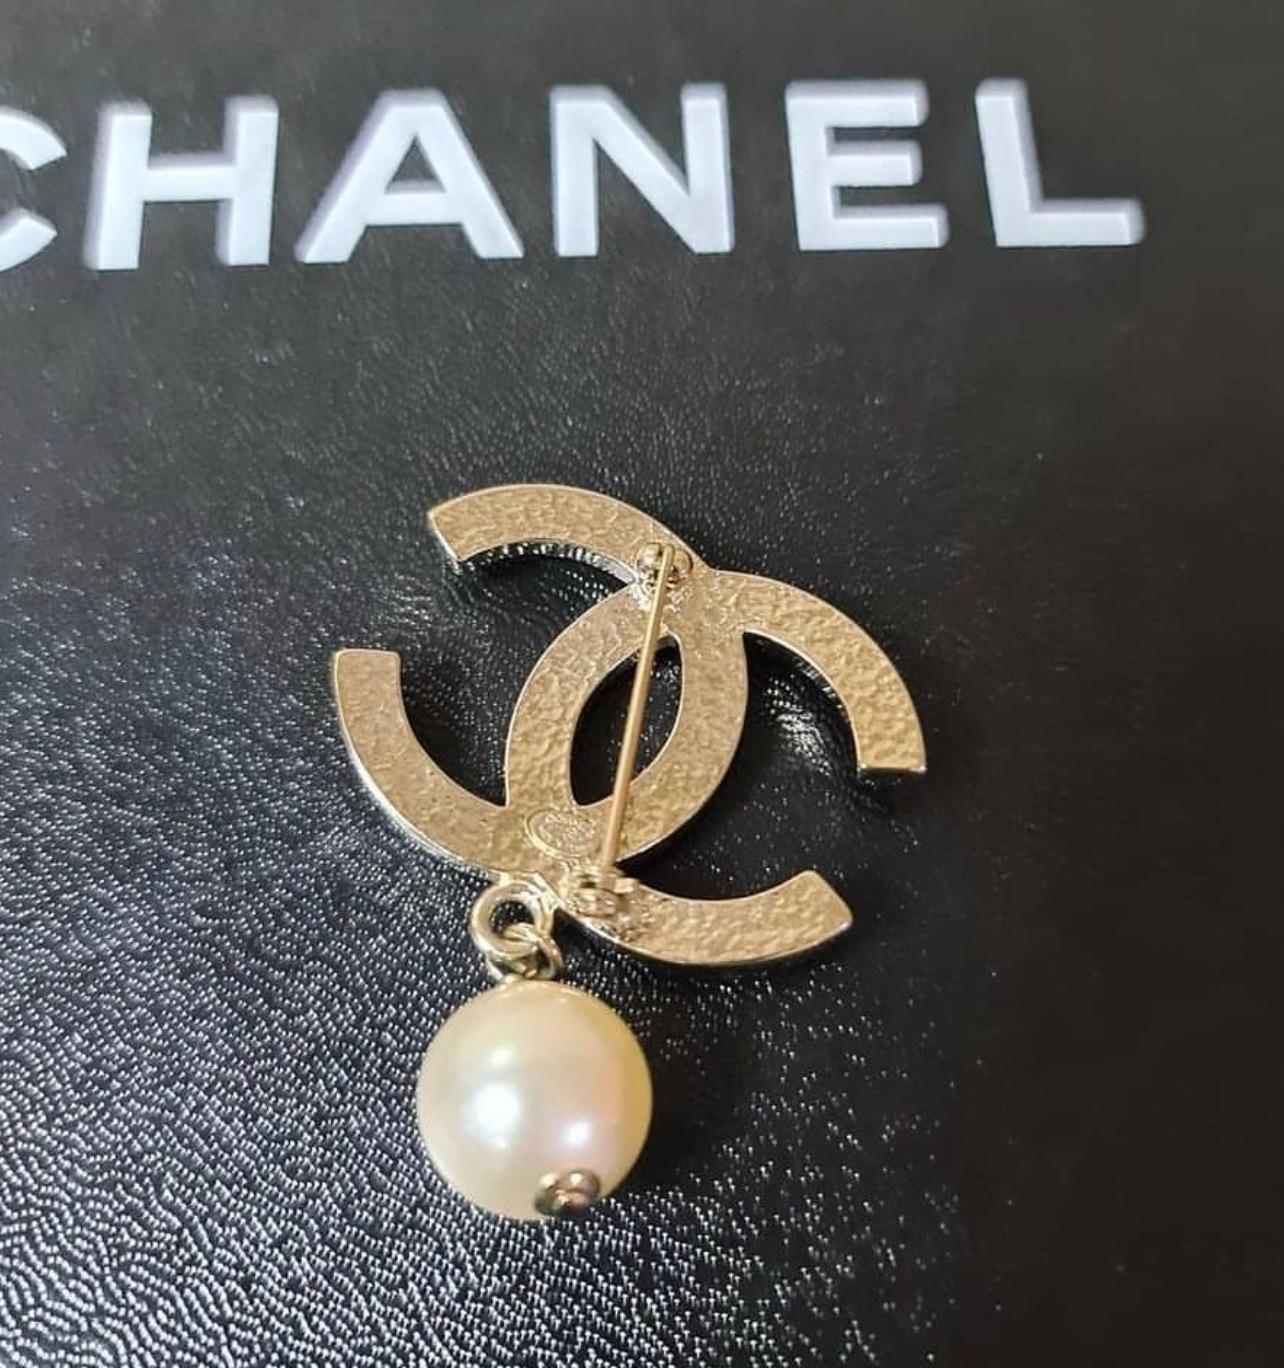 Metal Faux pearl
Pin closure
Made in France

Measures 1.5